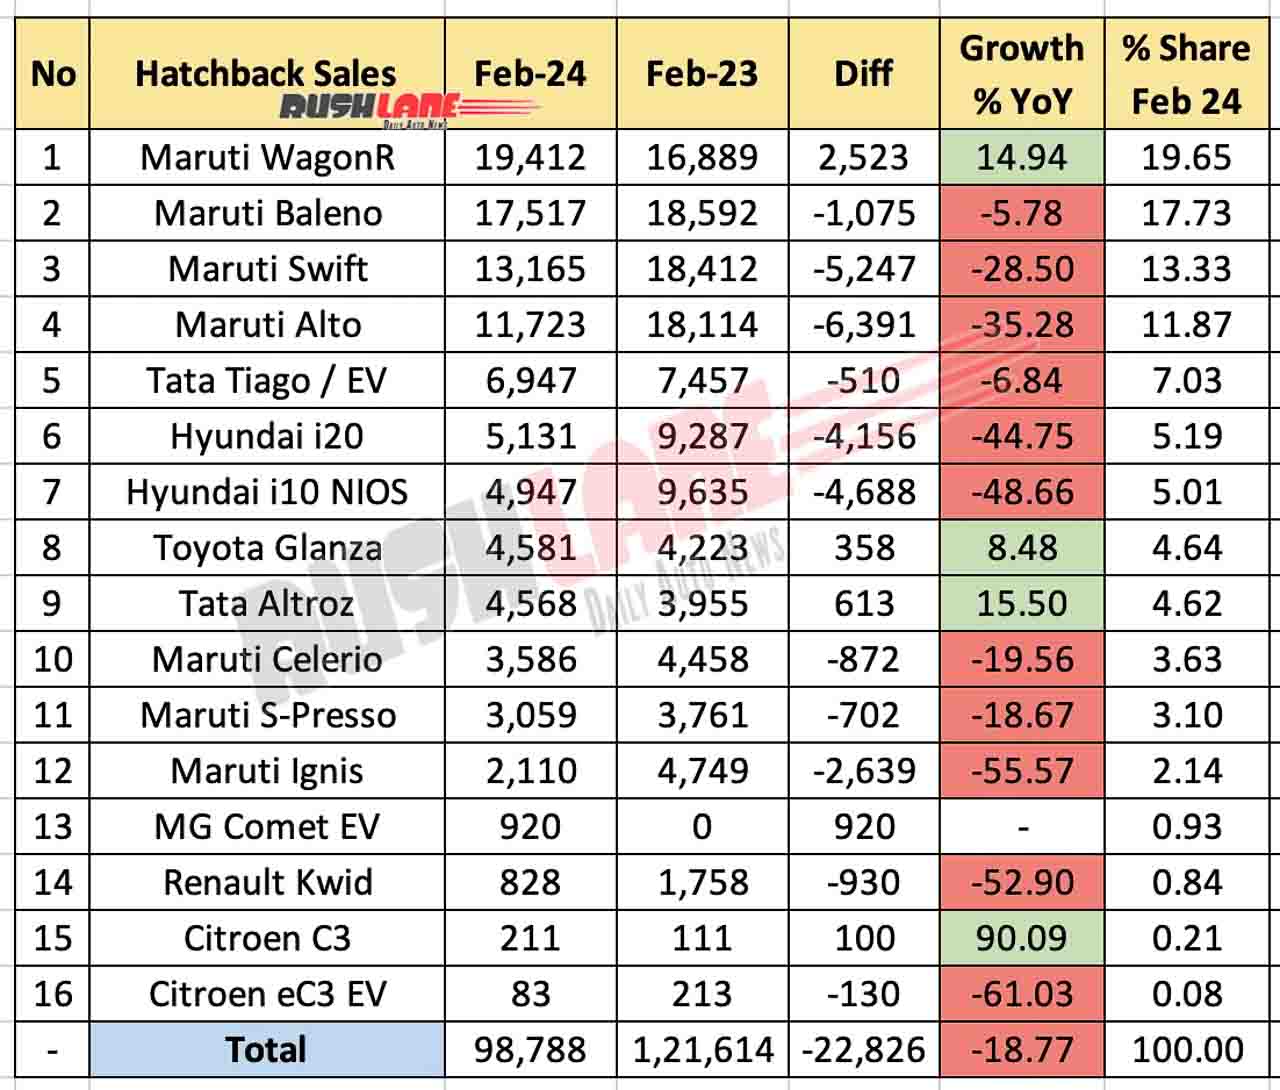 Hatchback Sales Feb 2024 vs Feb 2023 - YoY comparison